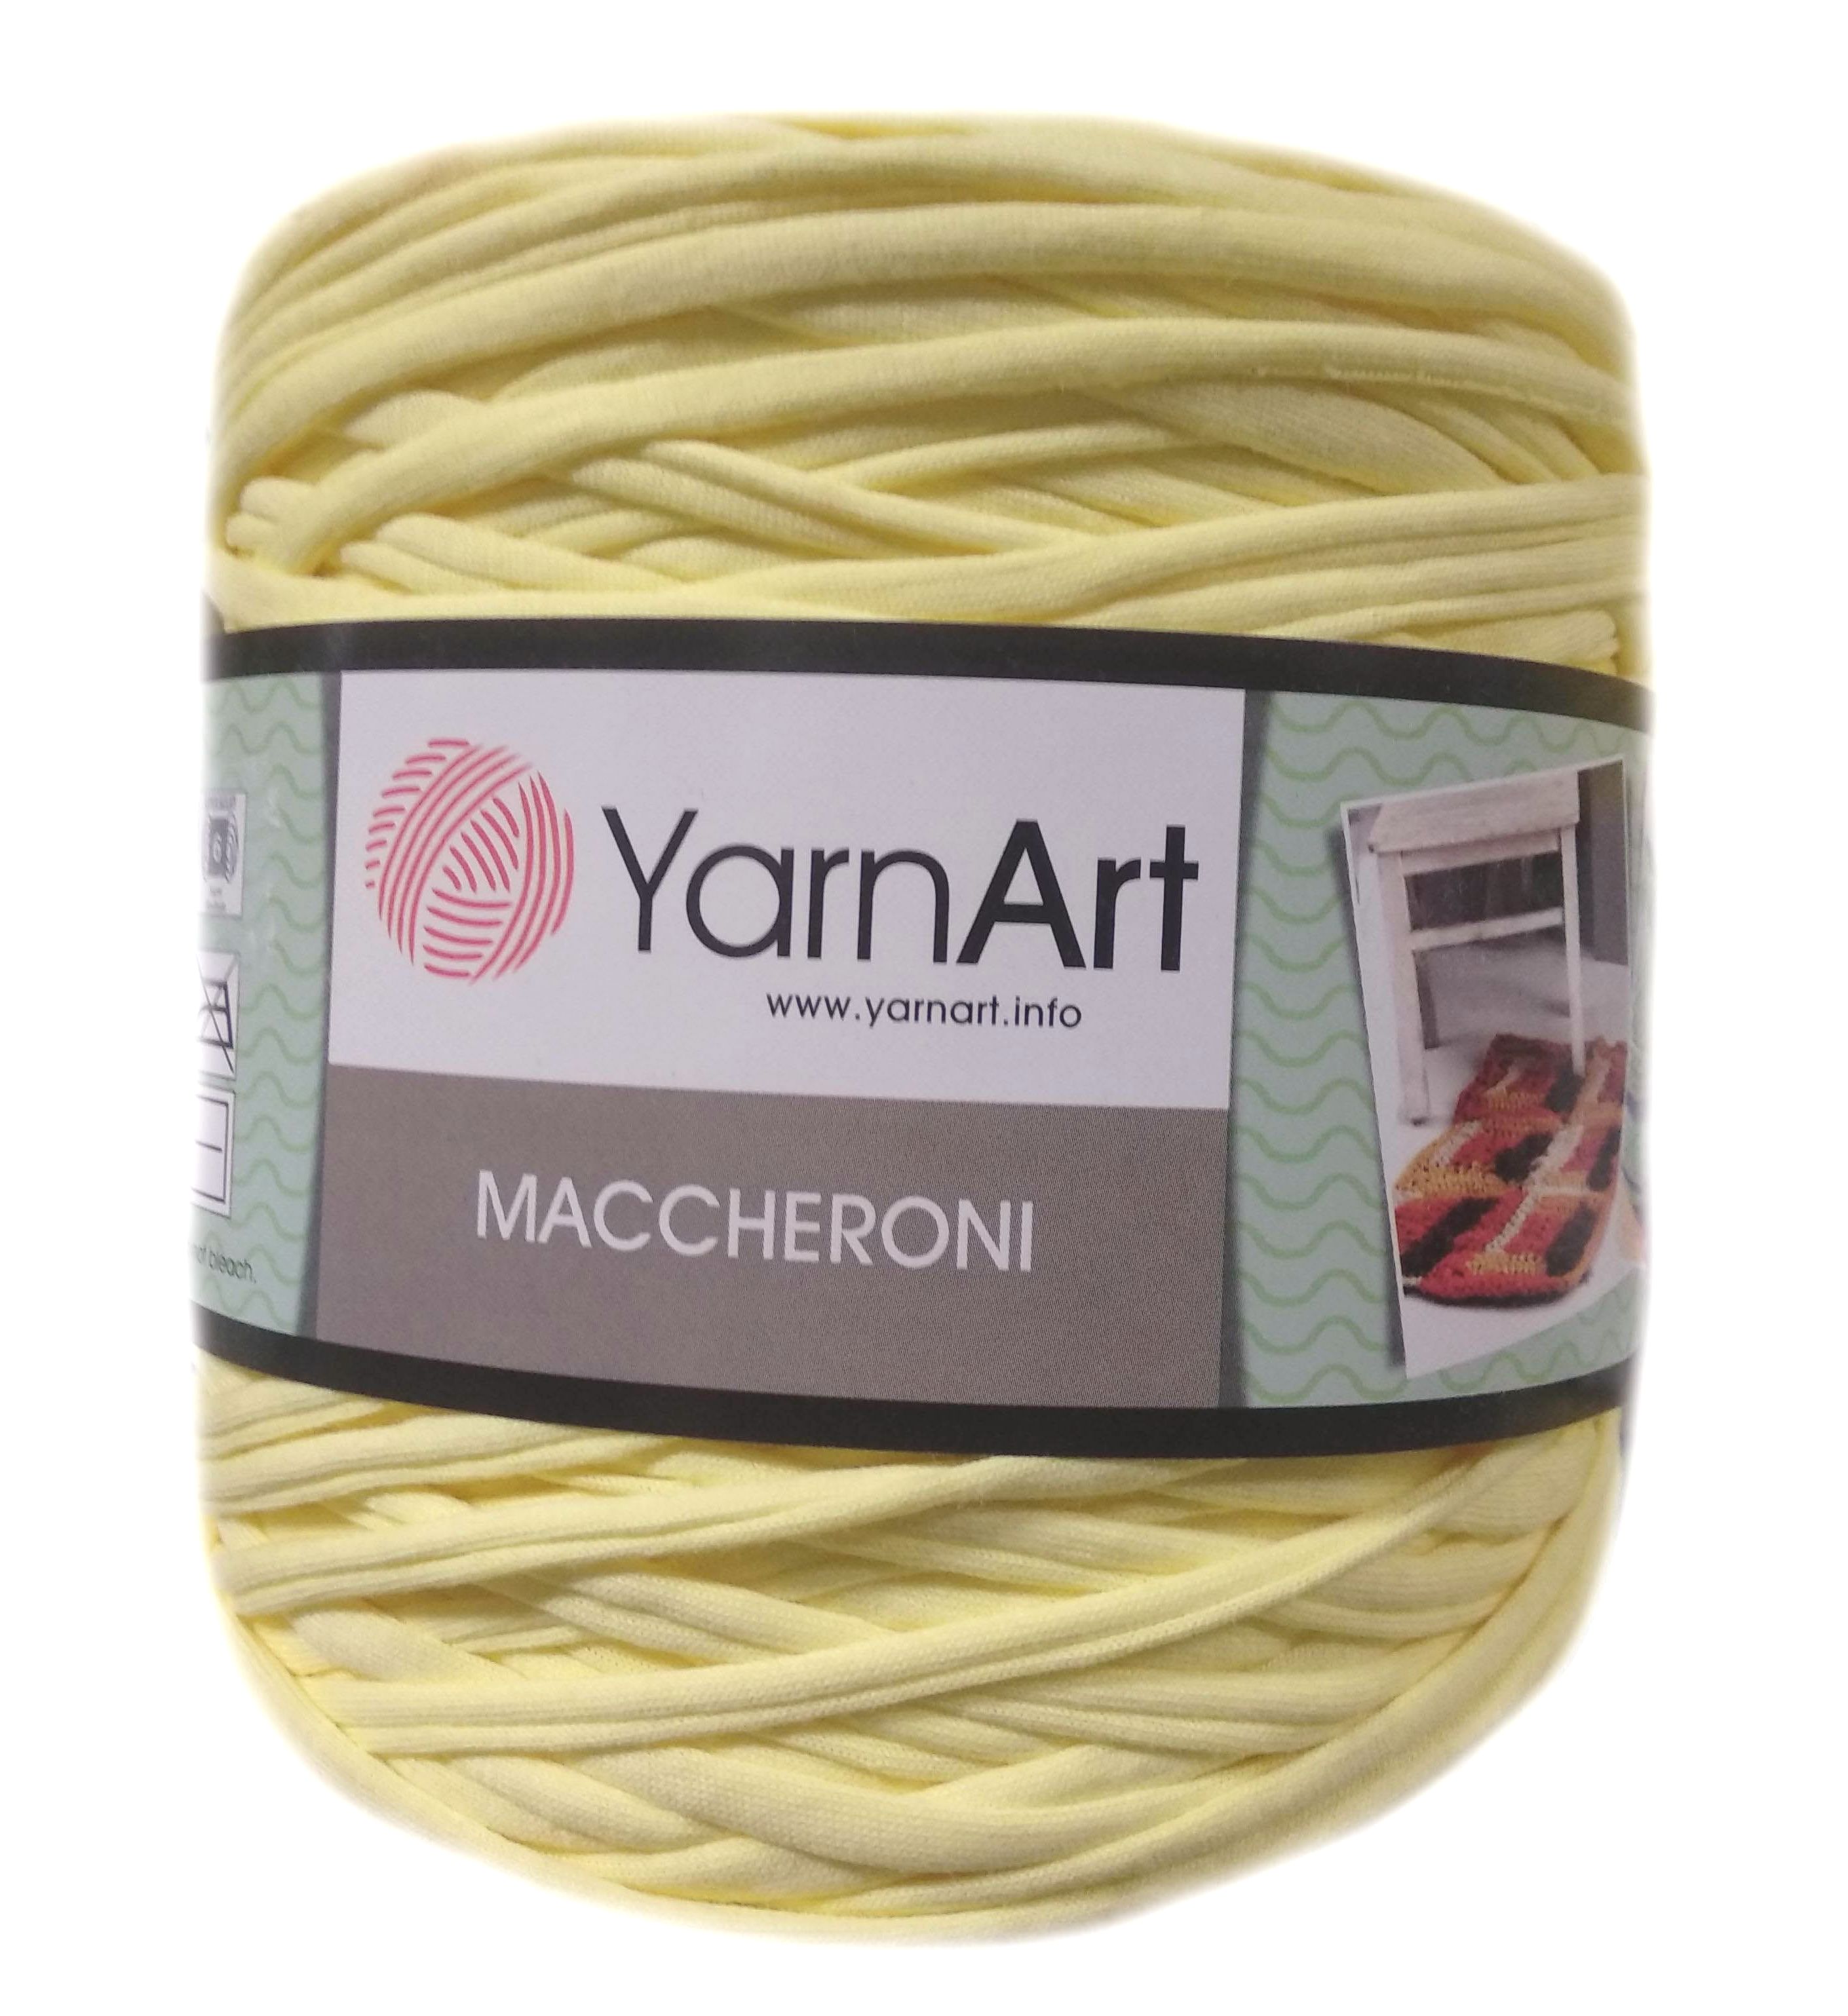 YarnArt MACCHERONI, citromsárga póló fonal.Tű 12-15 mm.